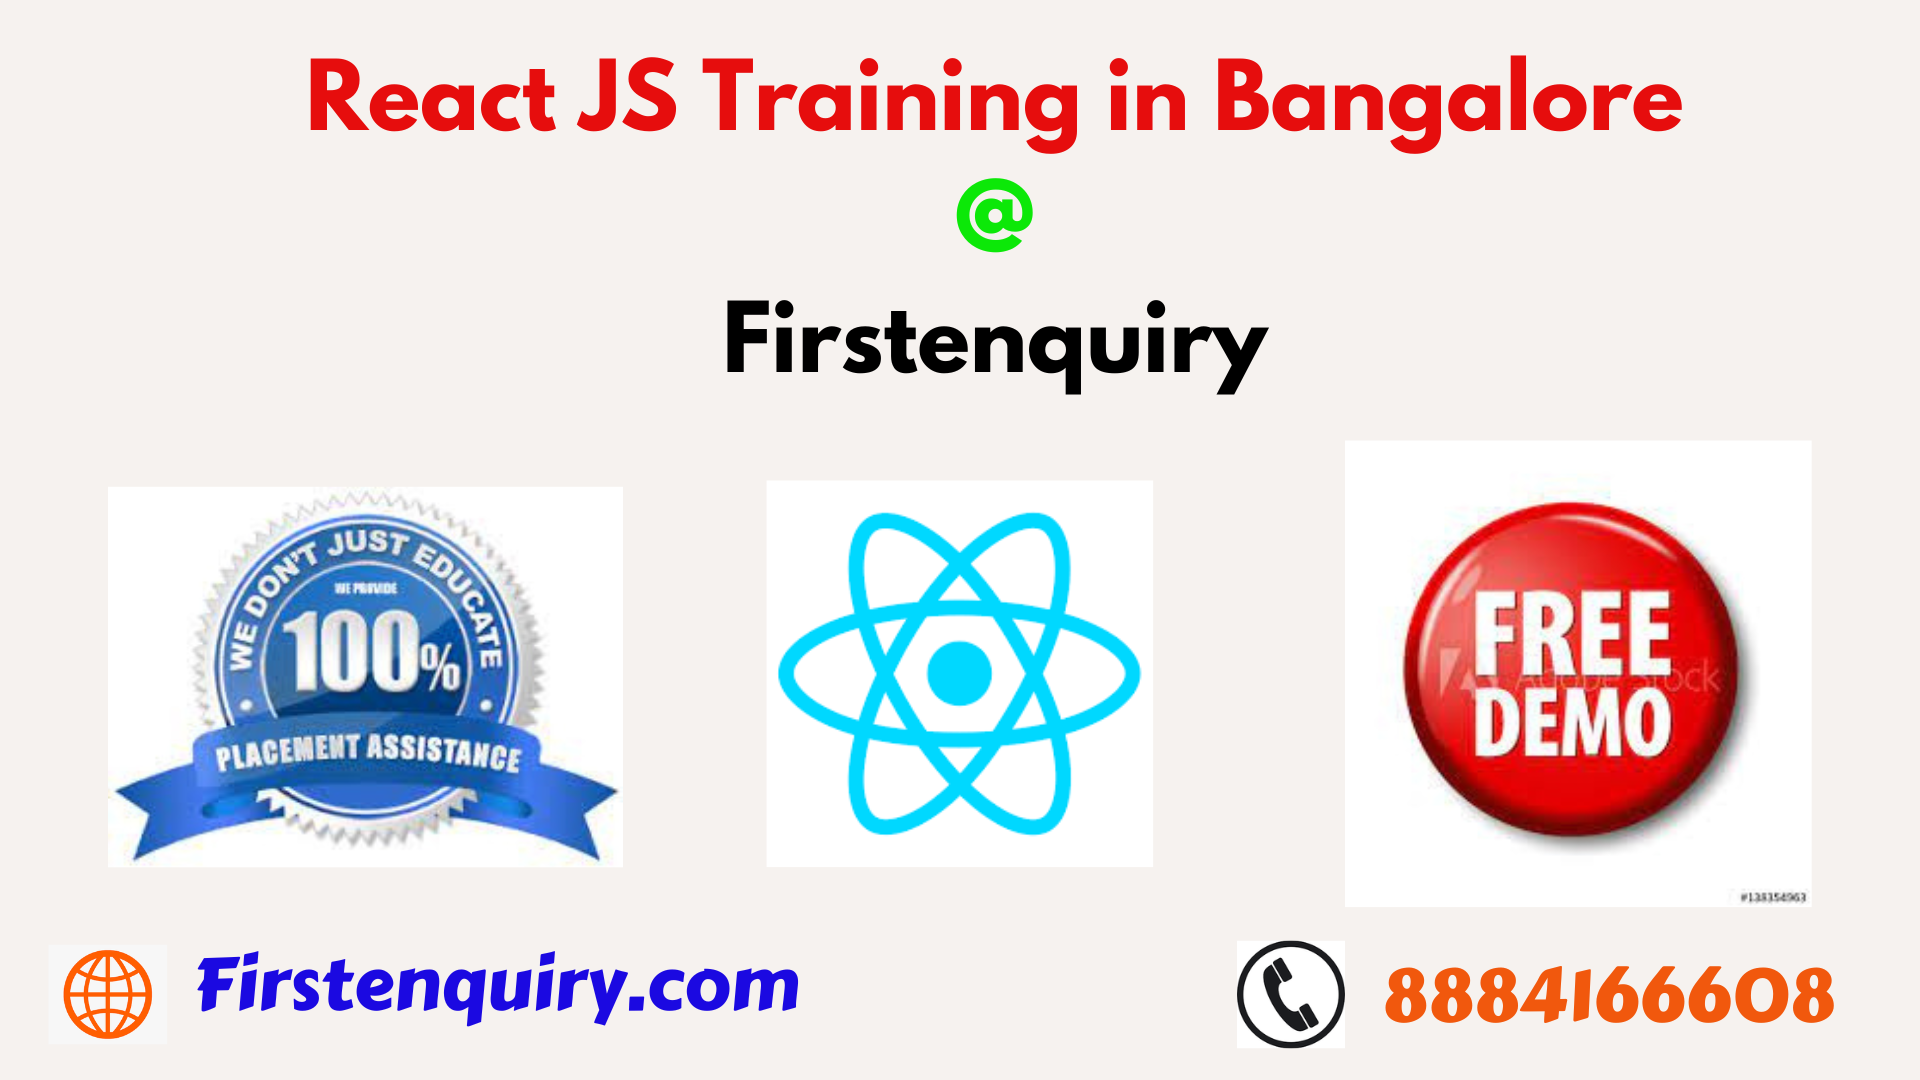 ReactJS Training in BangaloreEducation and LearningProfessional CoursesNoidaNoida Sector 15